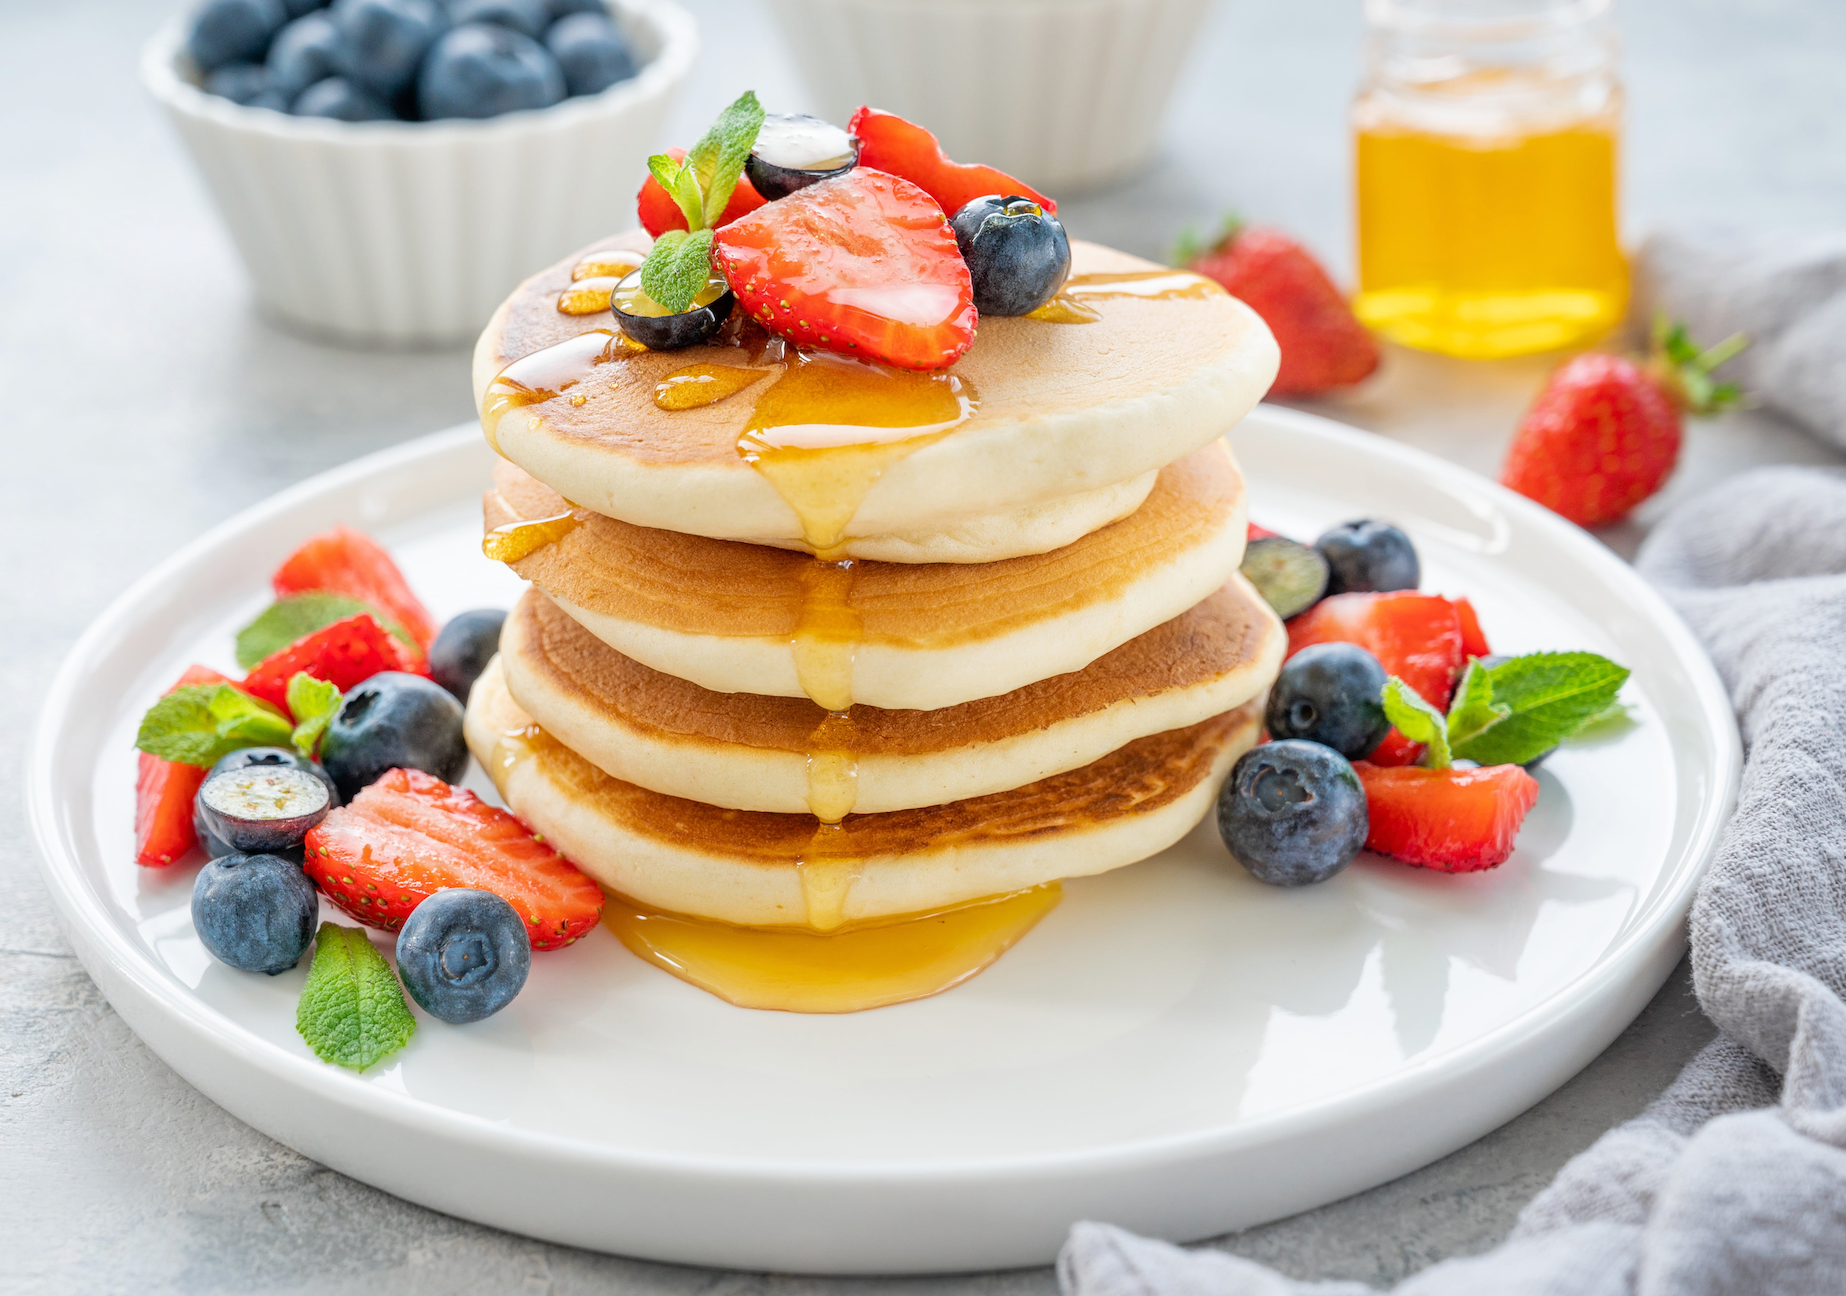 Fluffy Pancakes Recipe - The Secret to Fluffy Pancakes